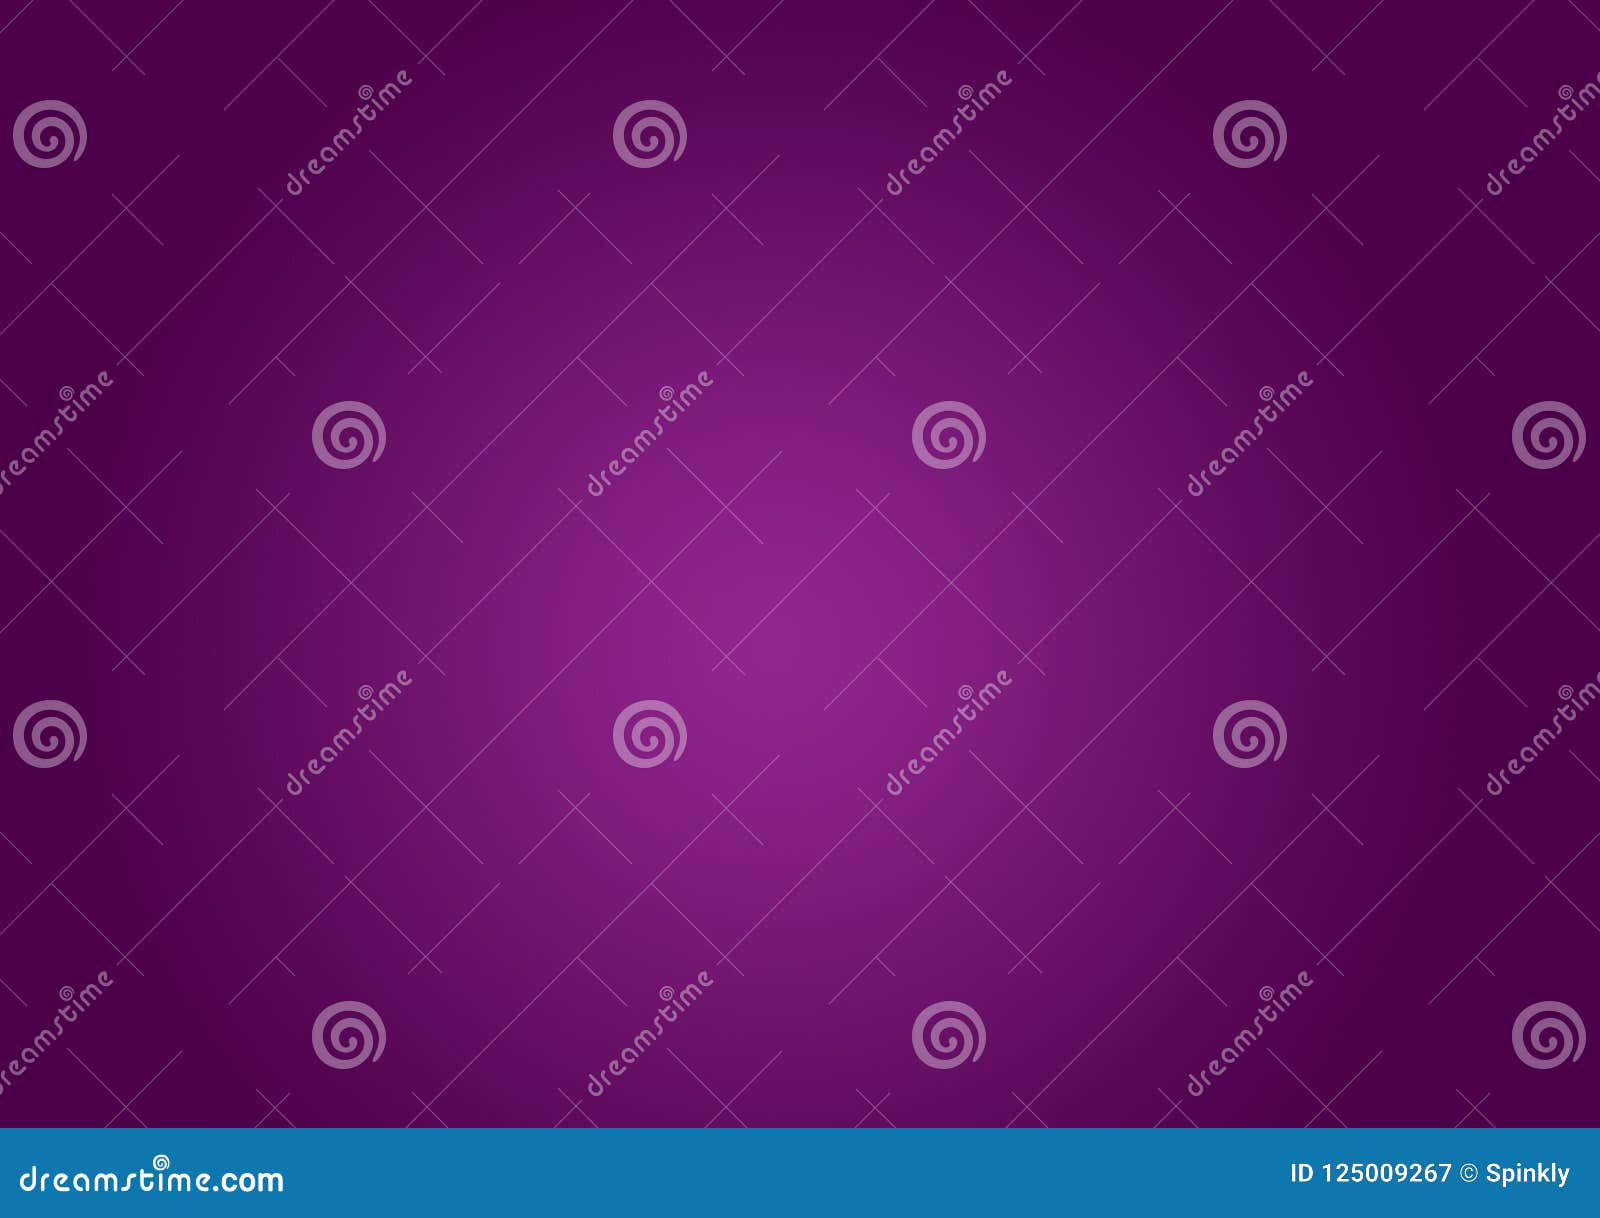 plain purple background with gradient